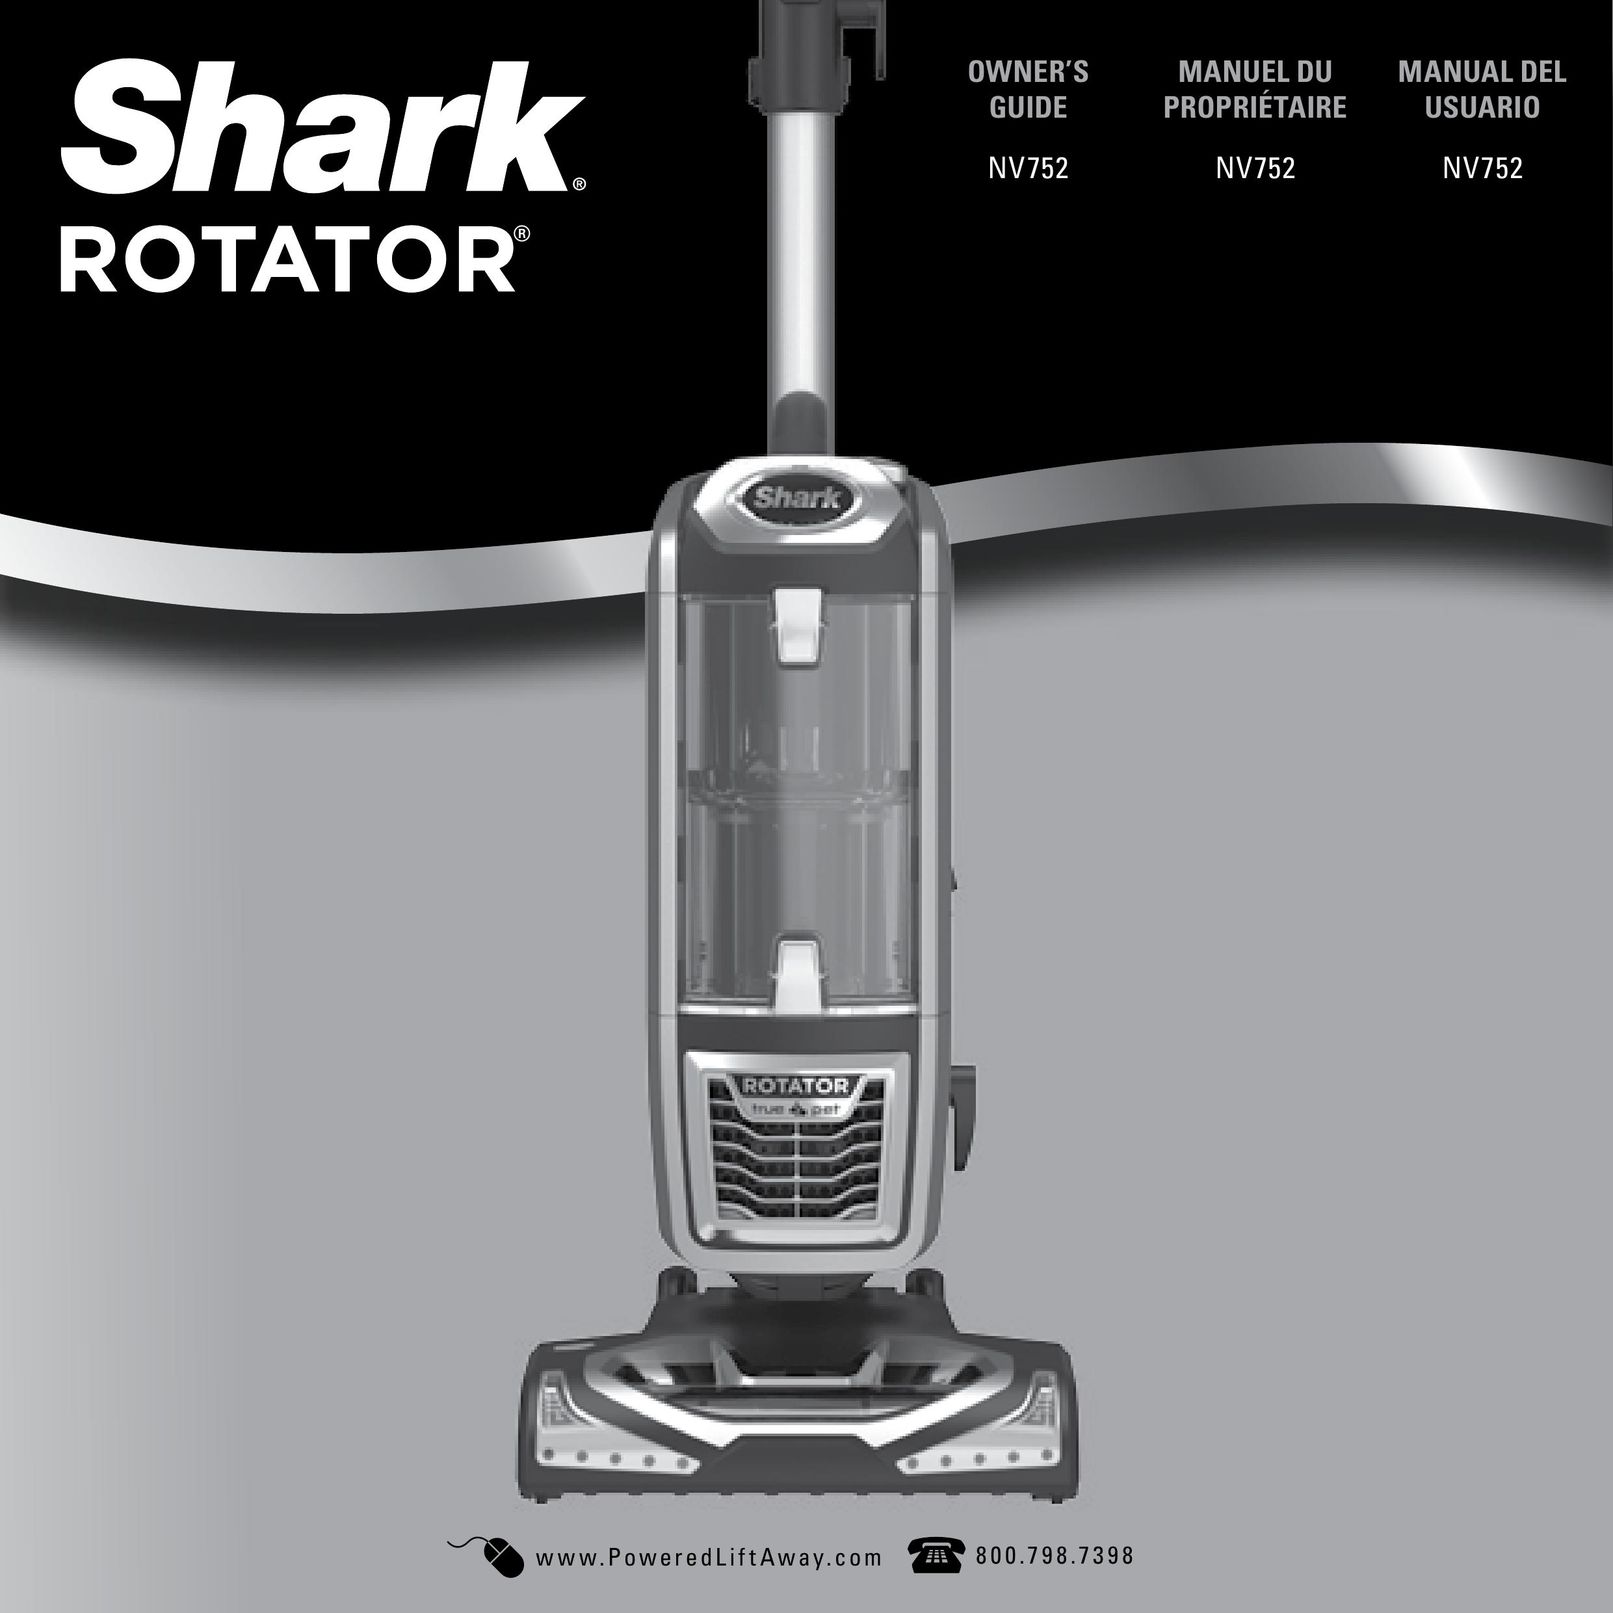 Shark NV752 Saw User Manual